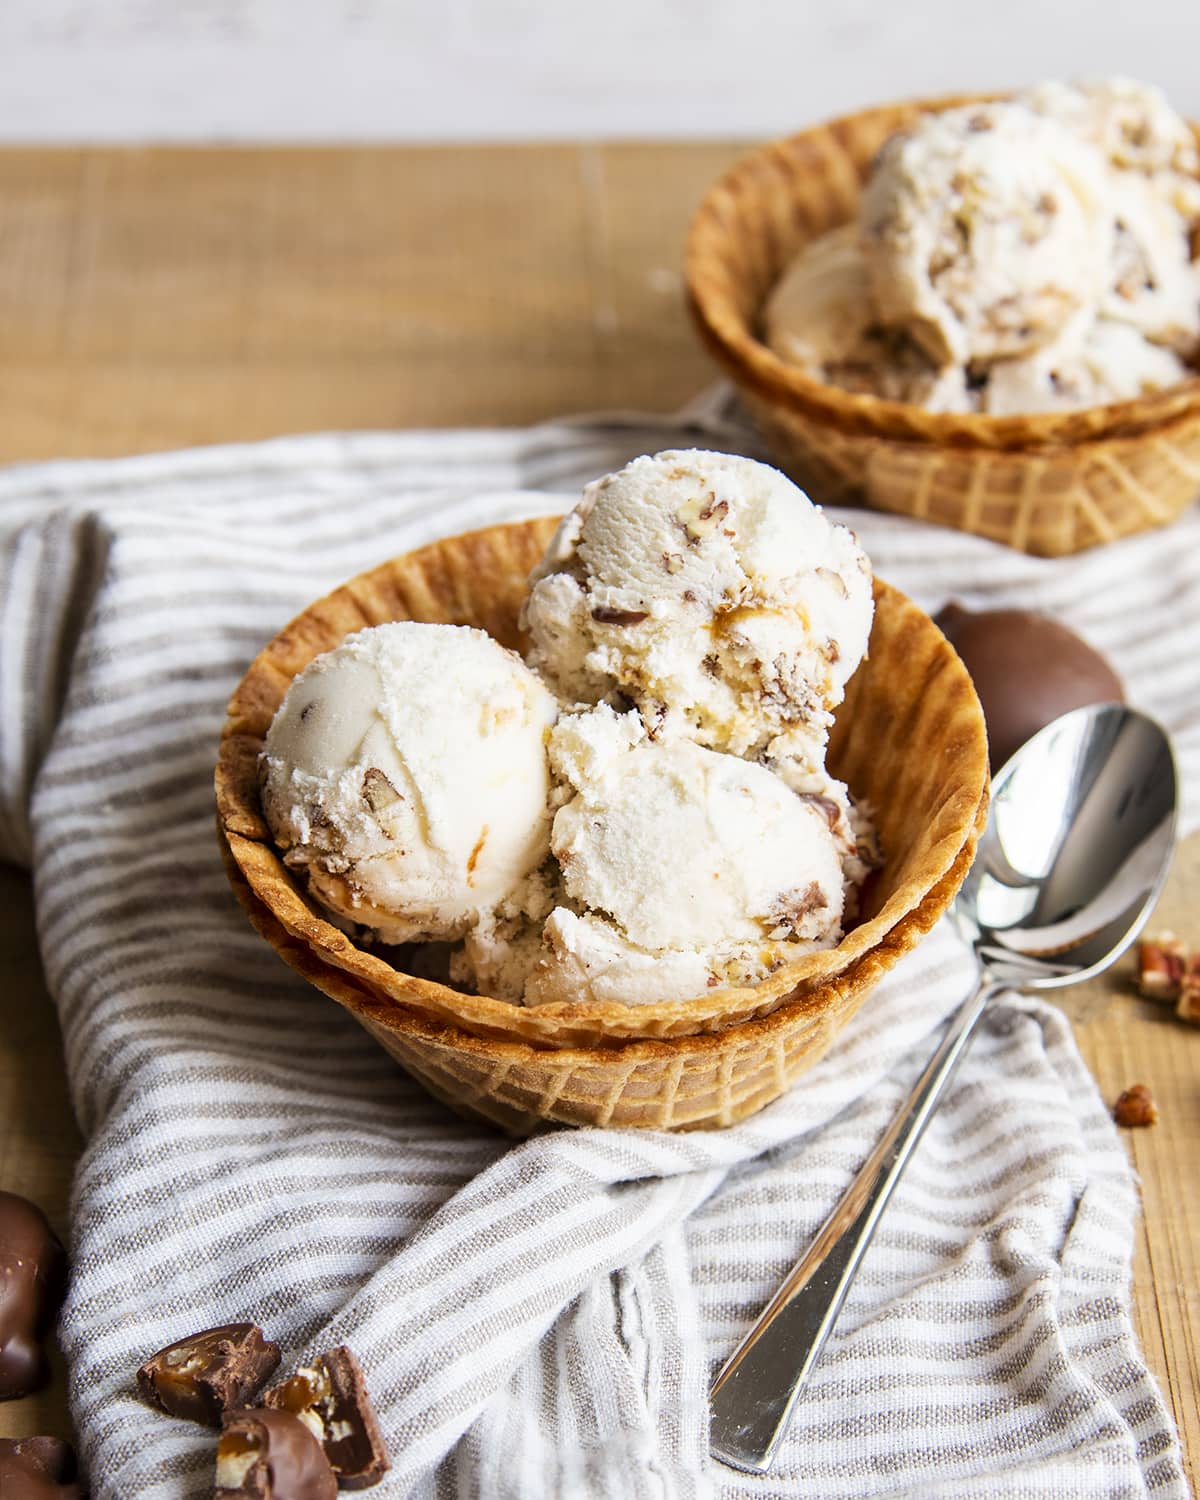 A bowl of vanilla ice cream with caramel swirls.